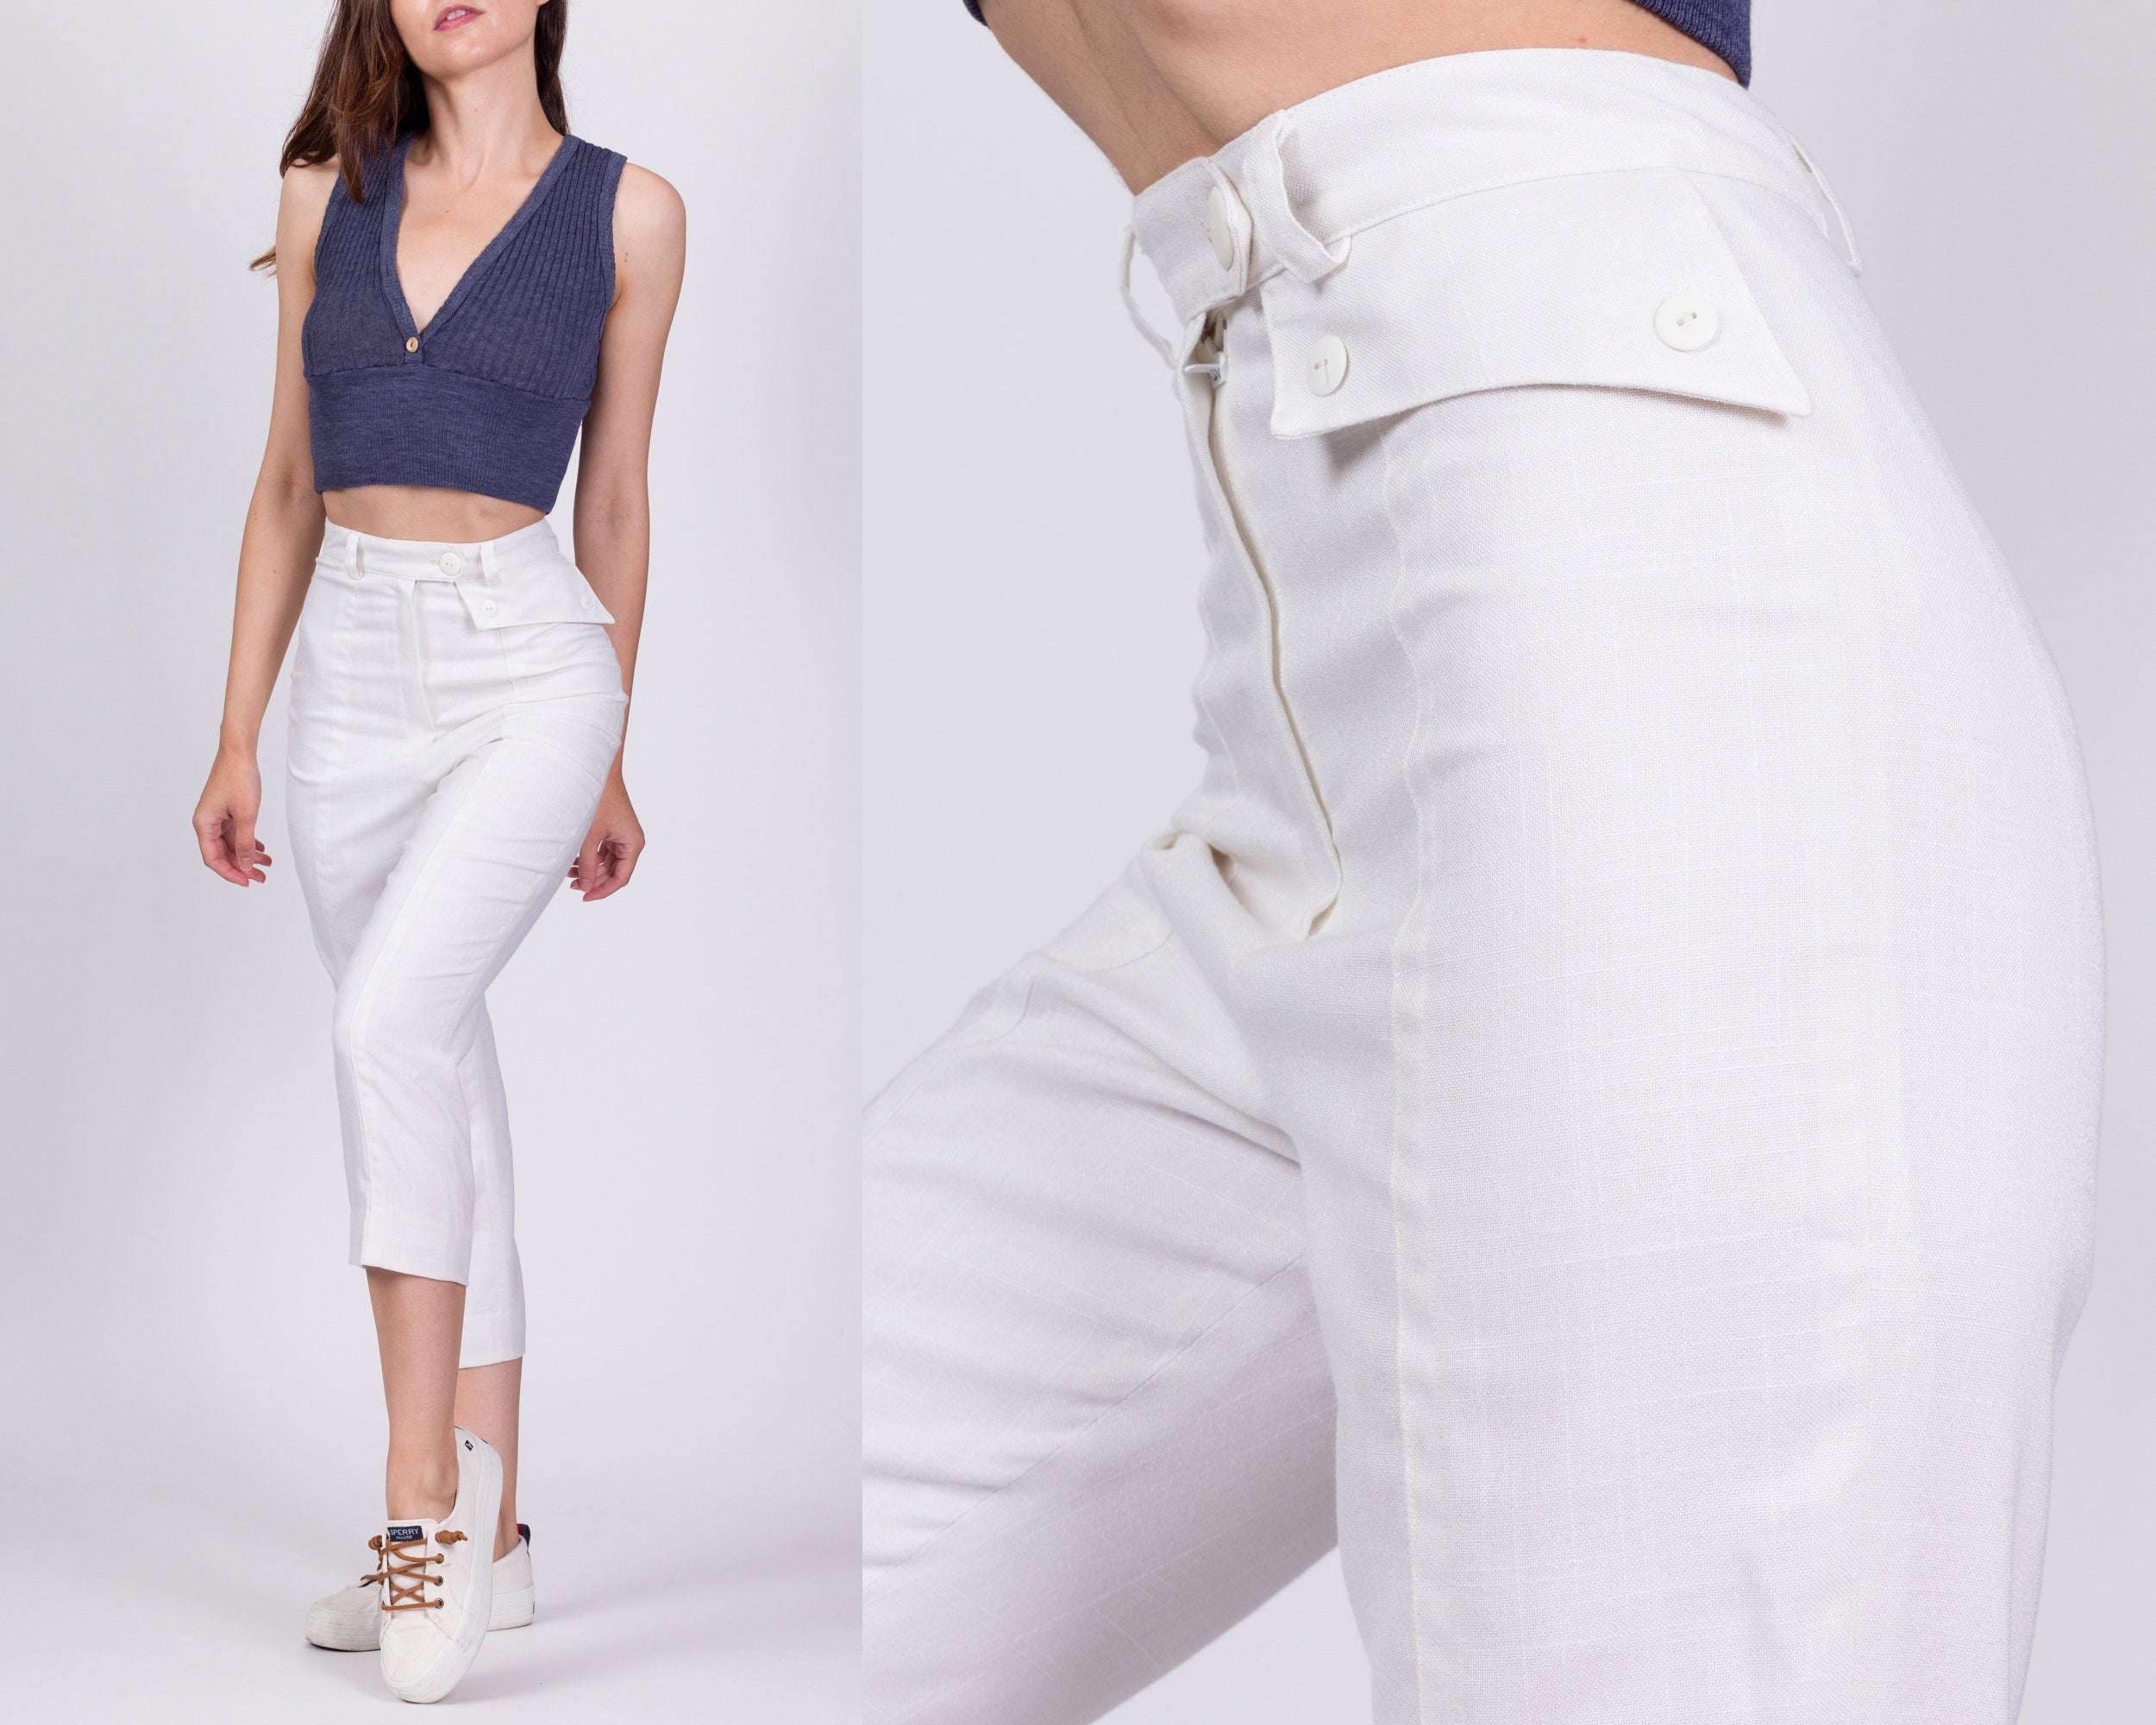 India's best white pant high waist designs for women | Priya Chaudhary